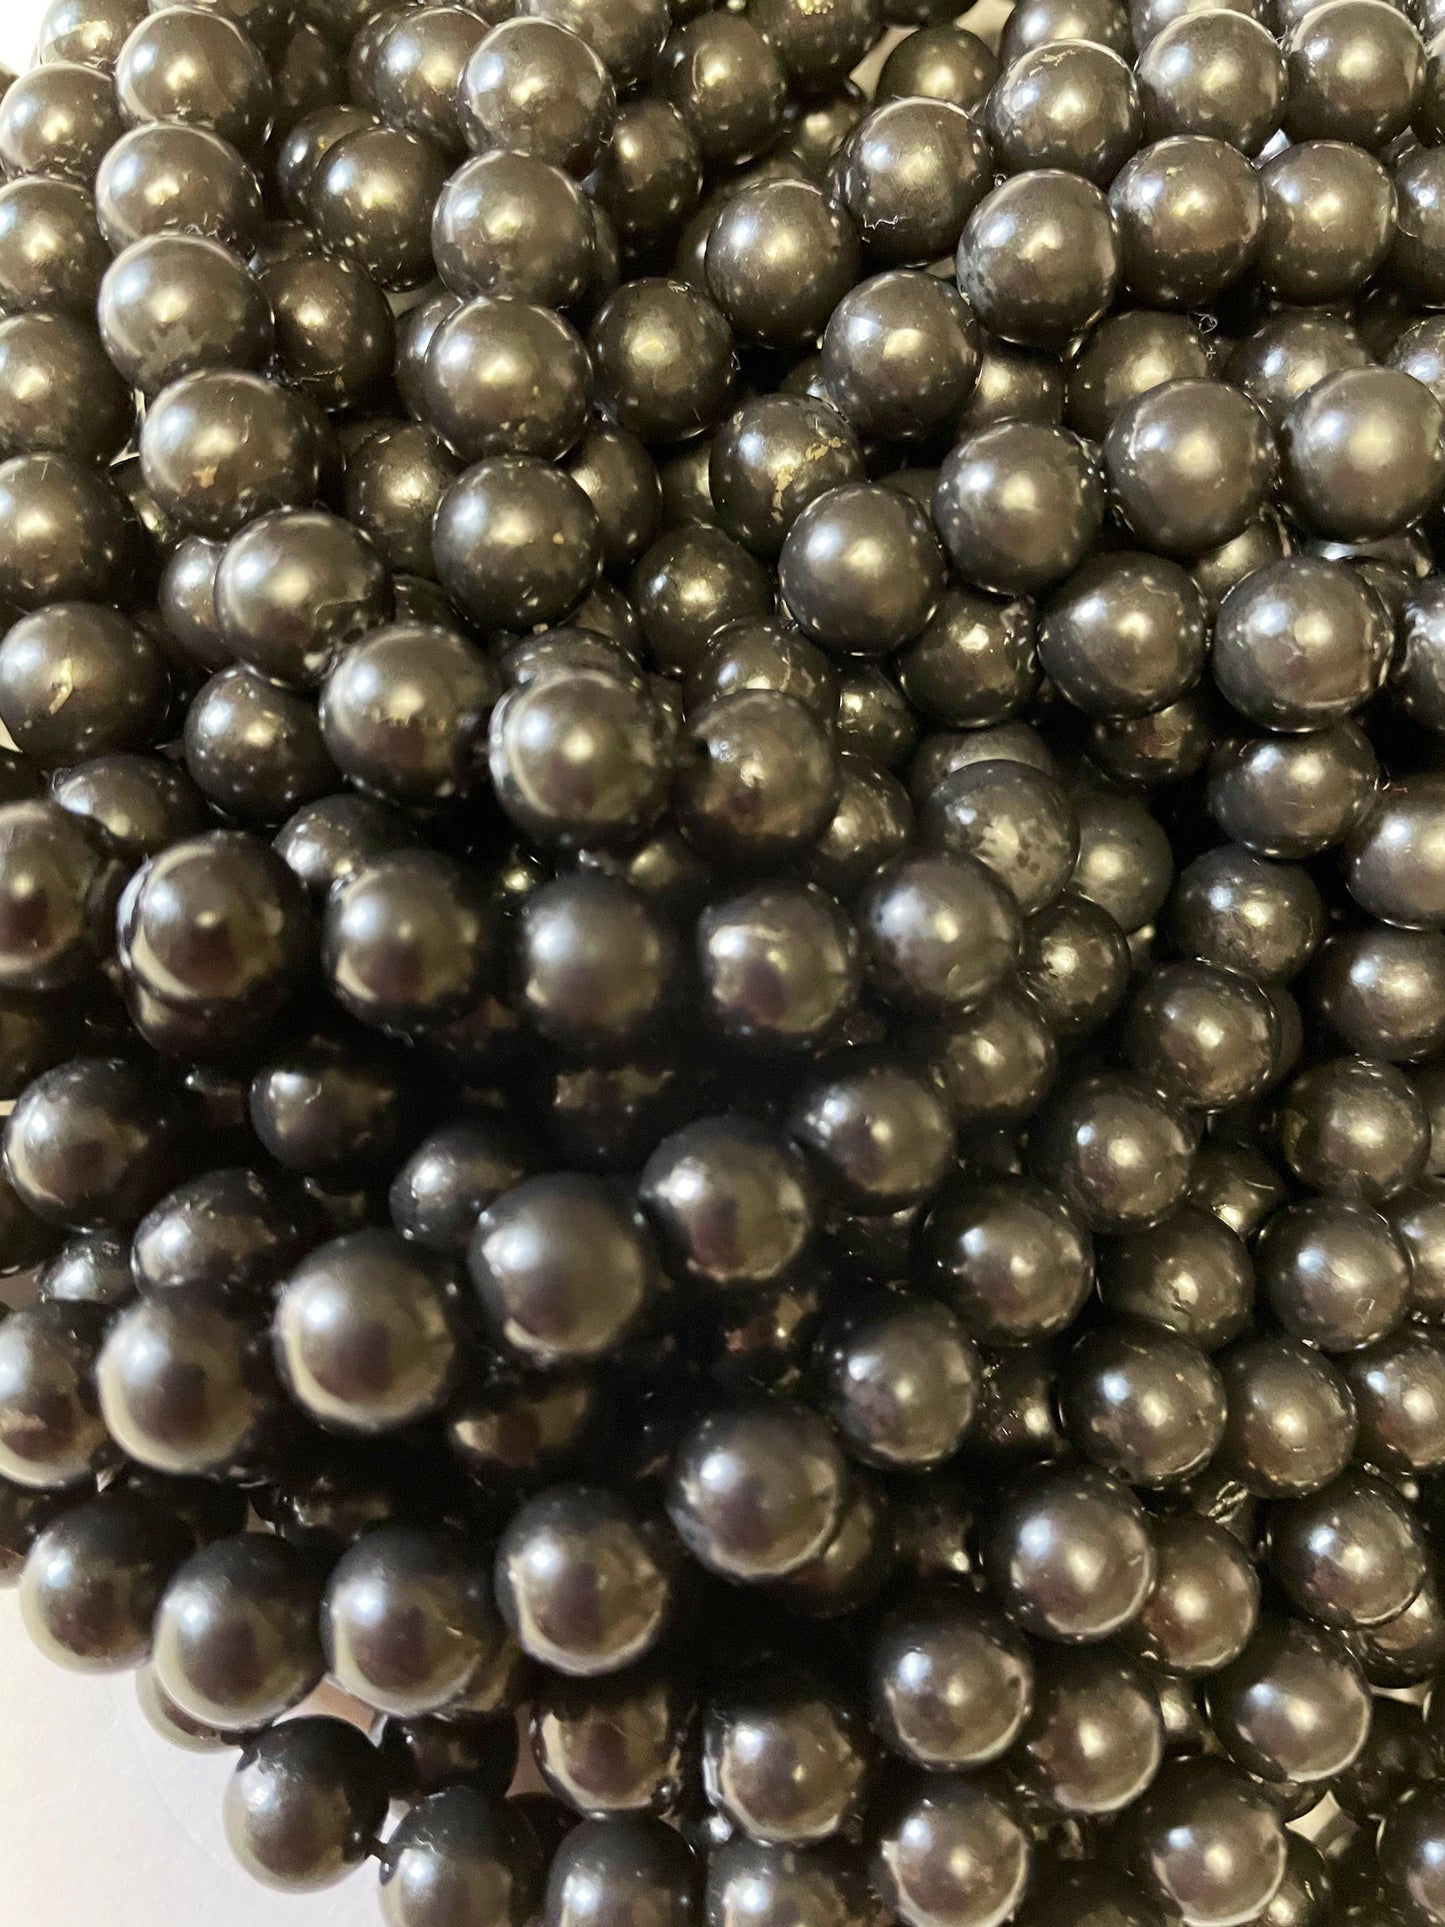 Natural Shungite Gemstone Beads 4mm 6mm 8mm 10mm 12mm Round Beads, Beautiful Natural Black Color Gemstone Bead